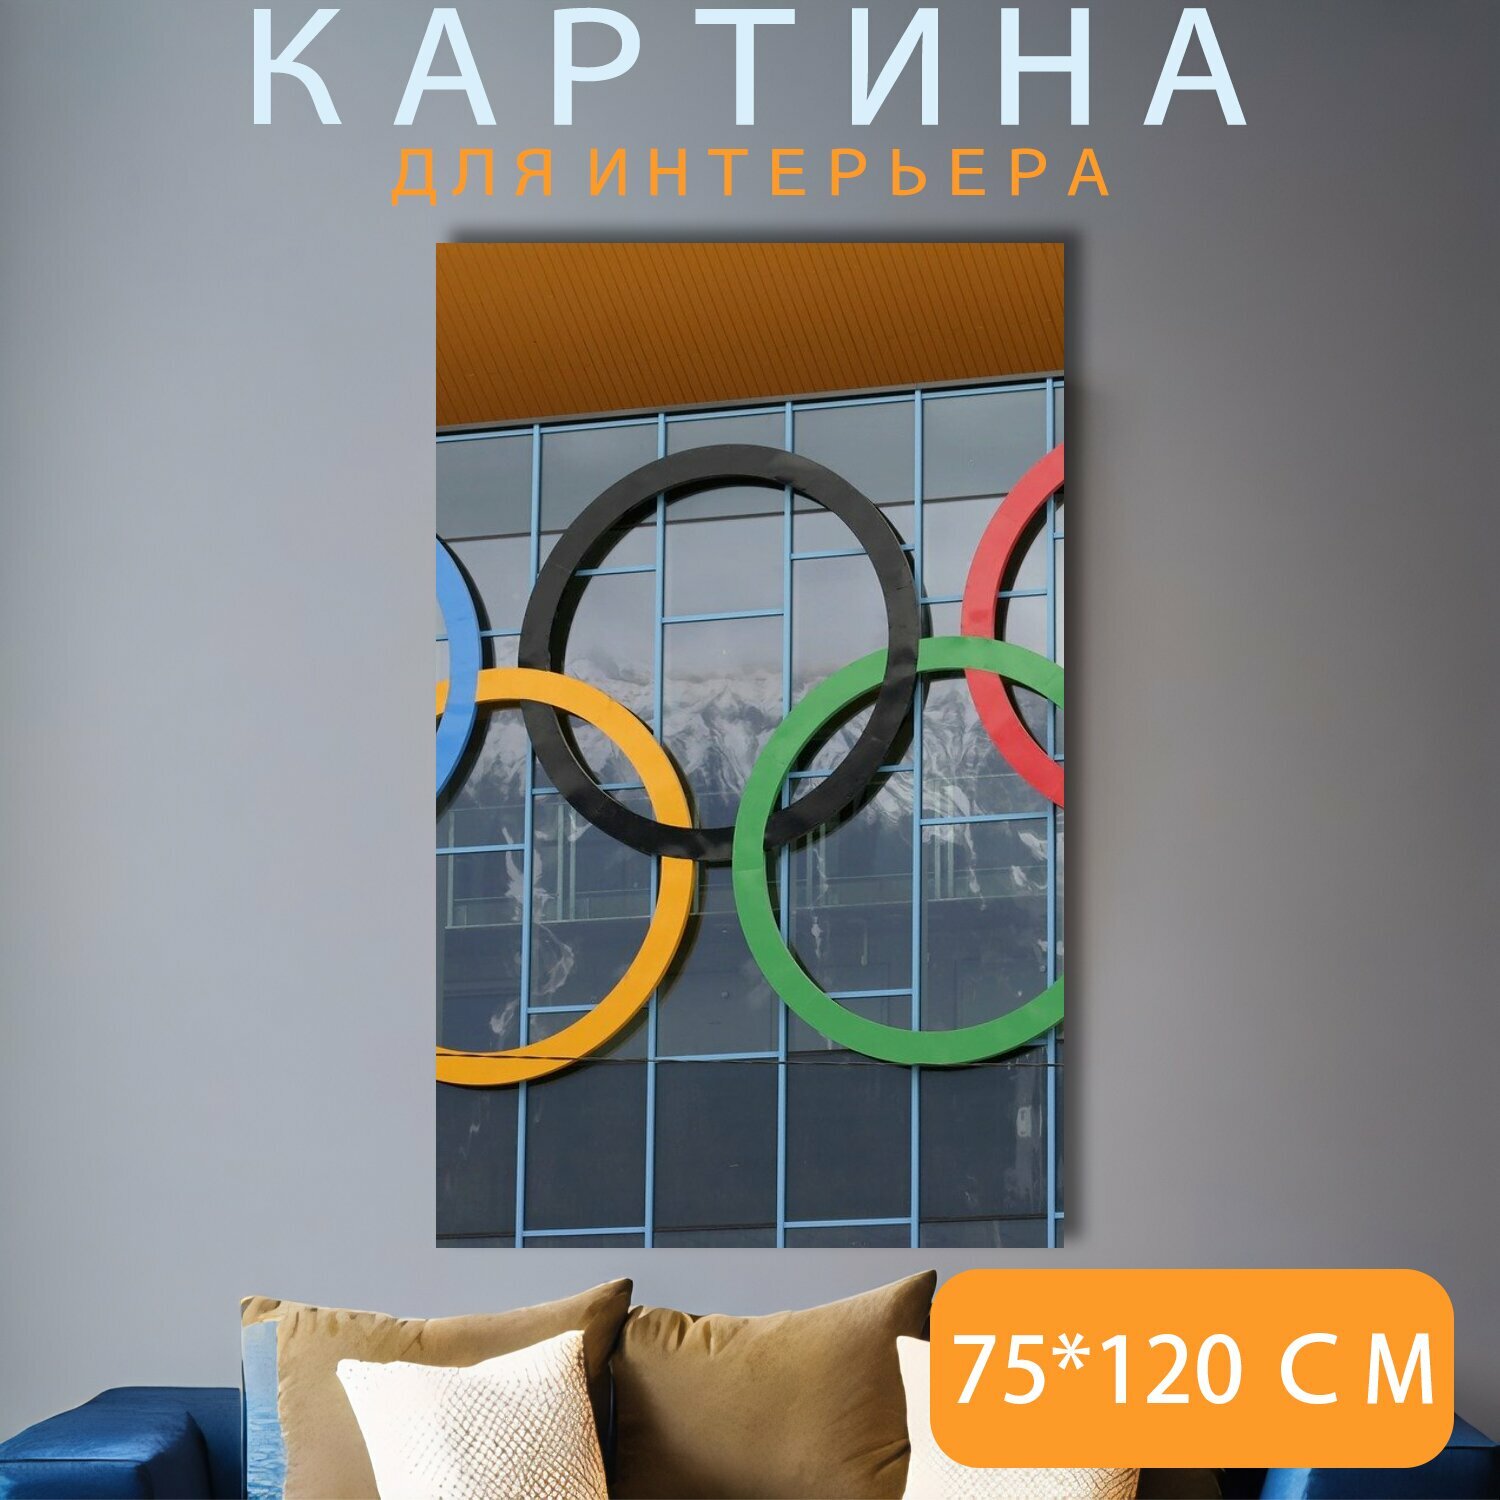 Картина на холсте "Олимпийские кольца, олимпиада, кольца" на подрамнике 75х120 см. для интерьера